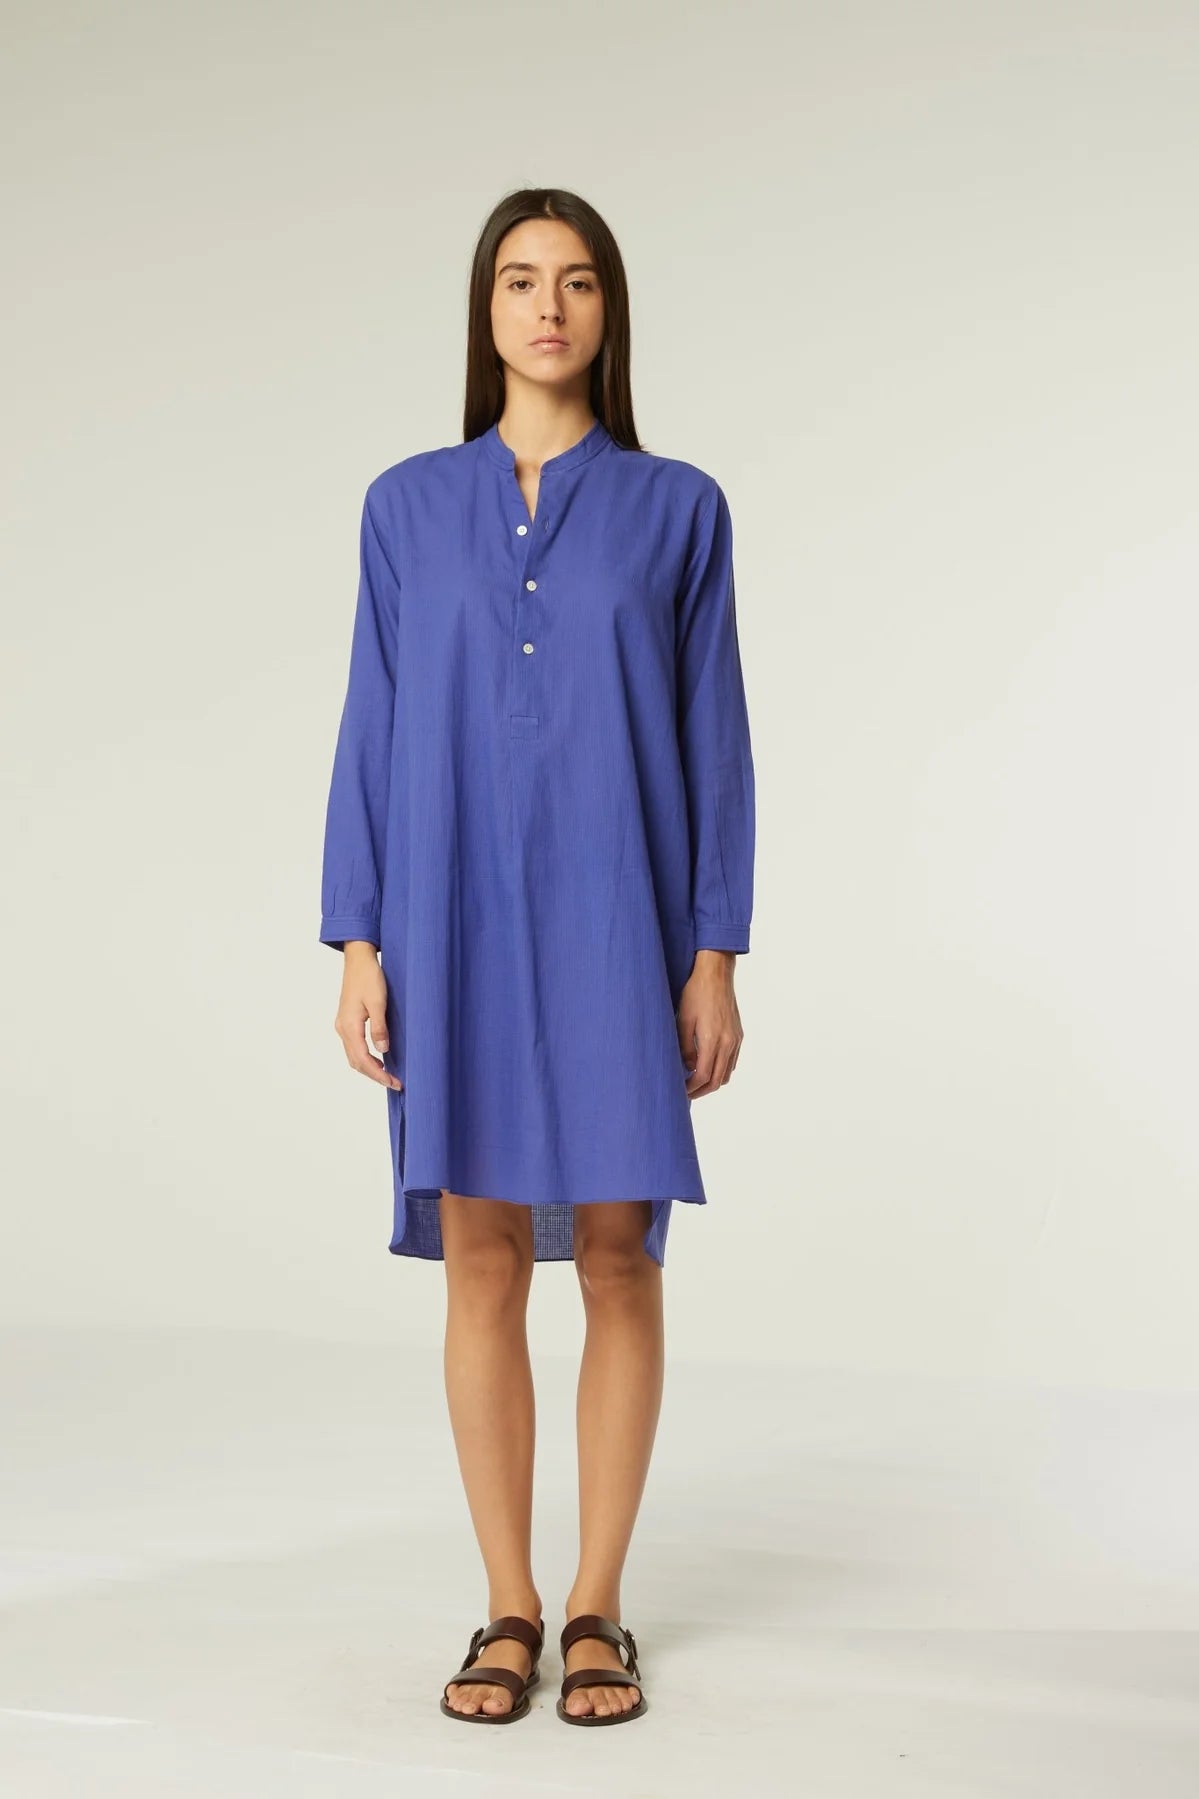 Moismont Dress Martine Pansy Blue - Size 10/12